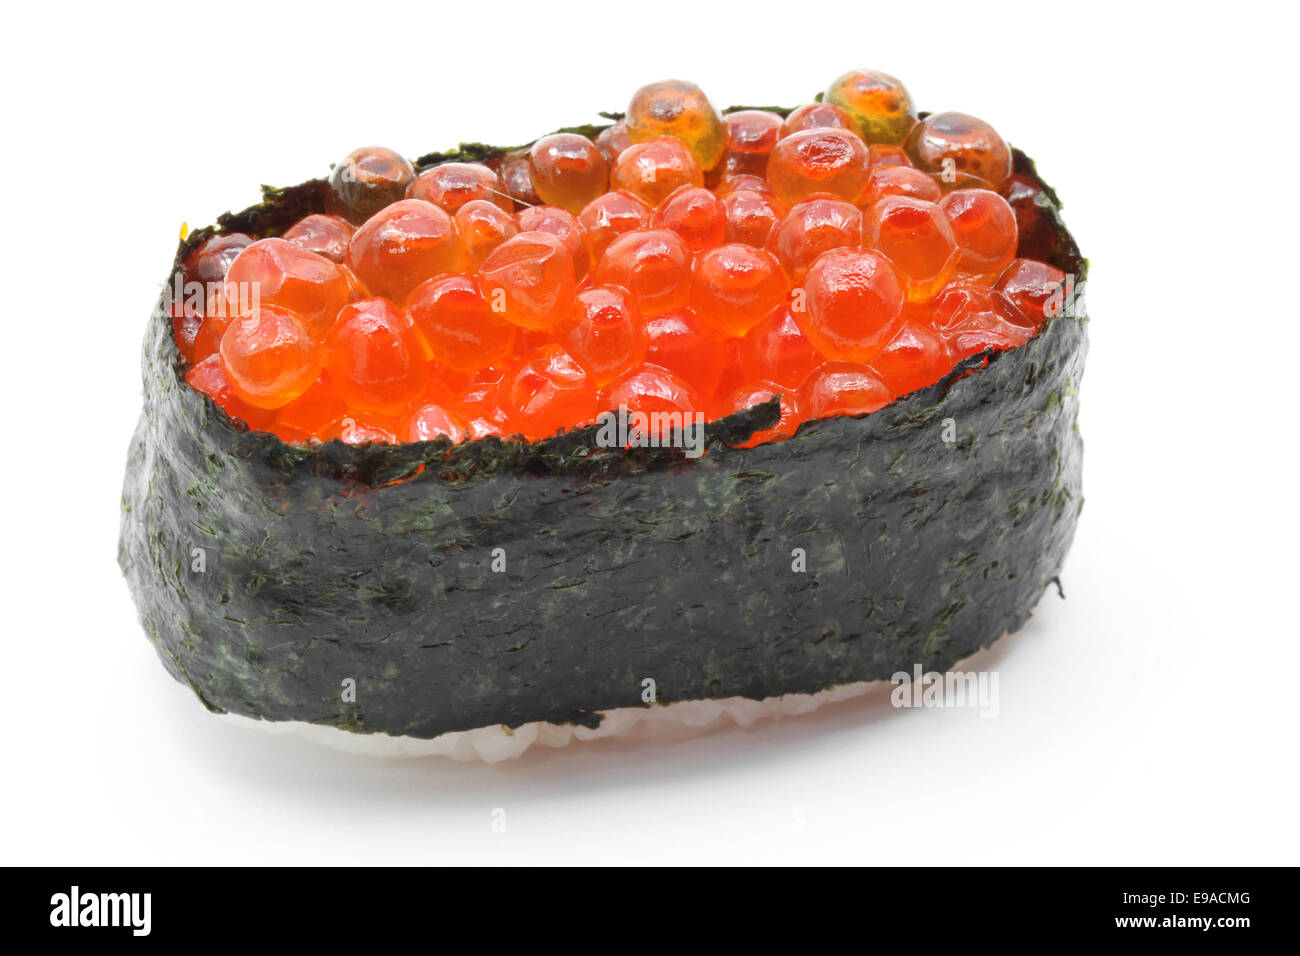 ikura salmon egg roll sushi Stock Photo - Alamy